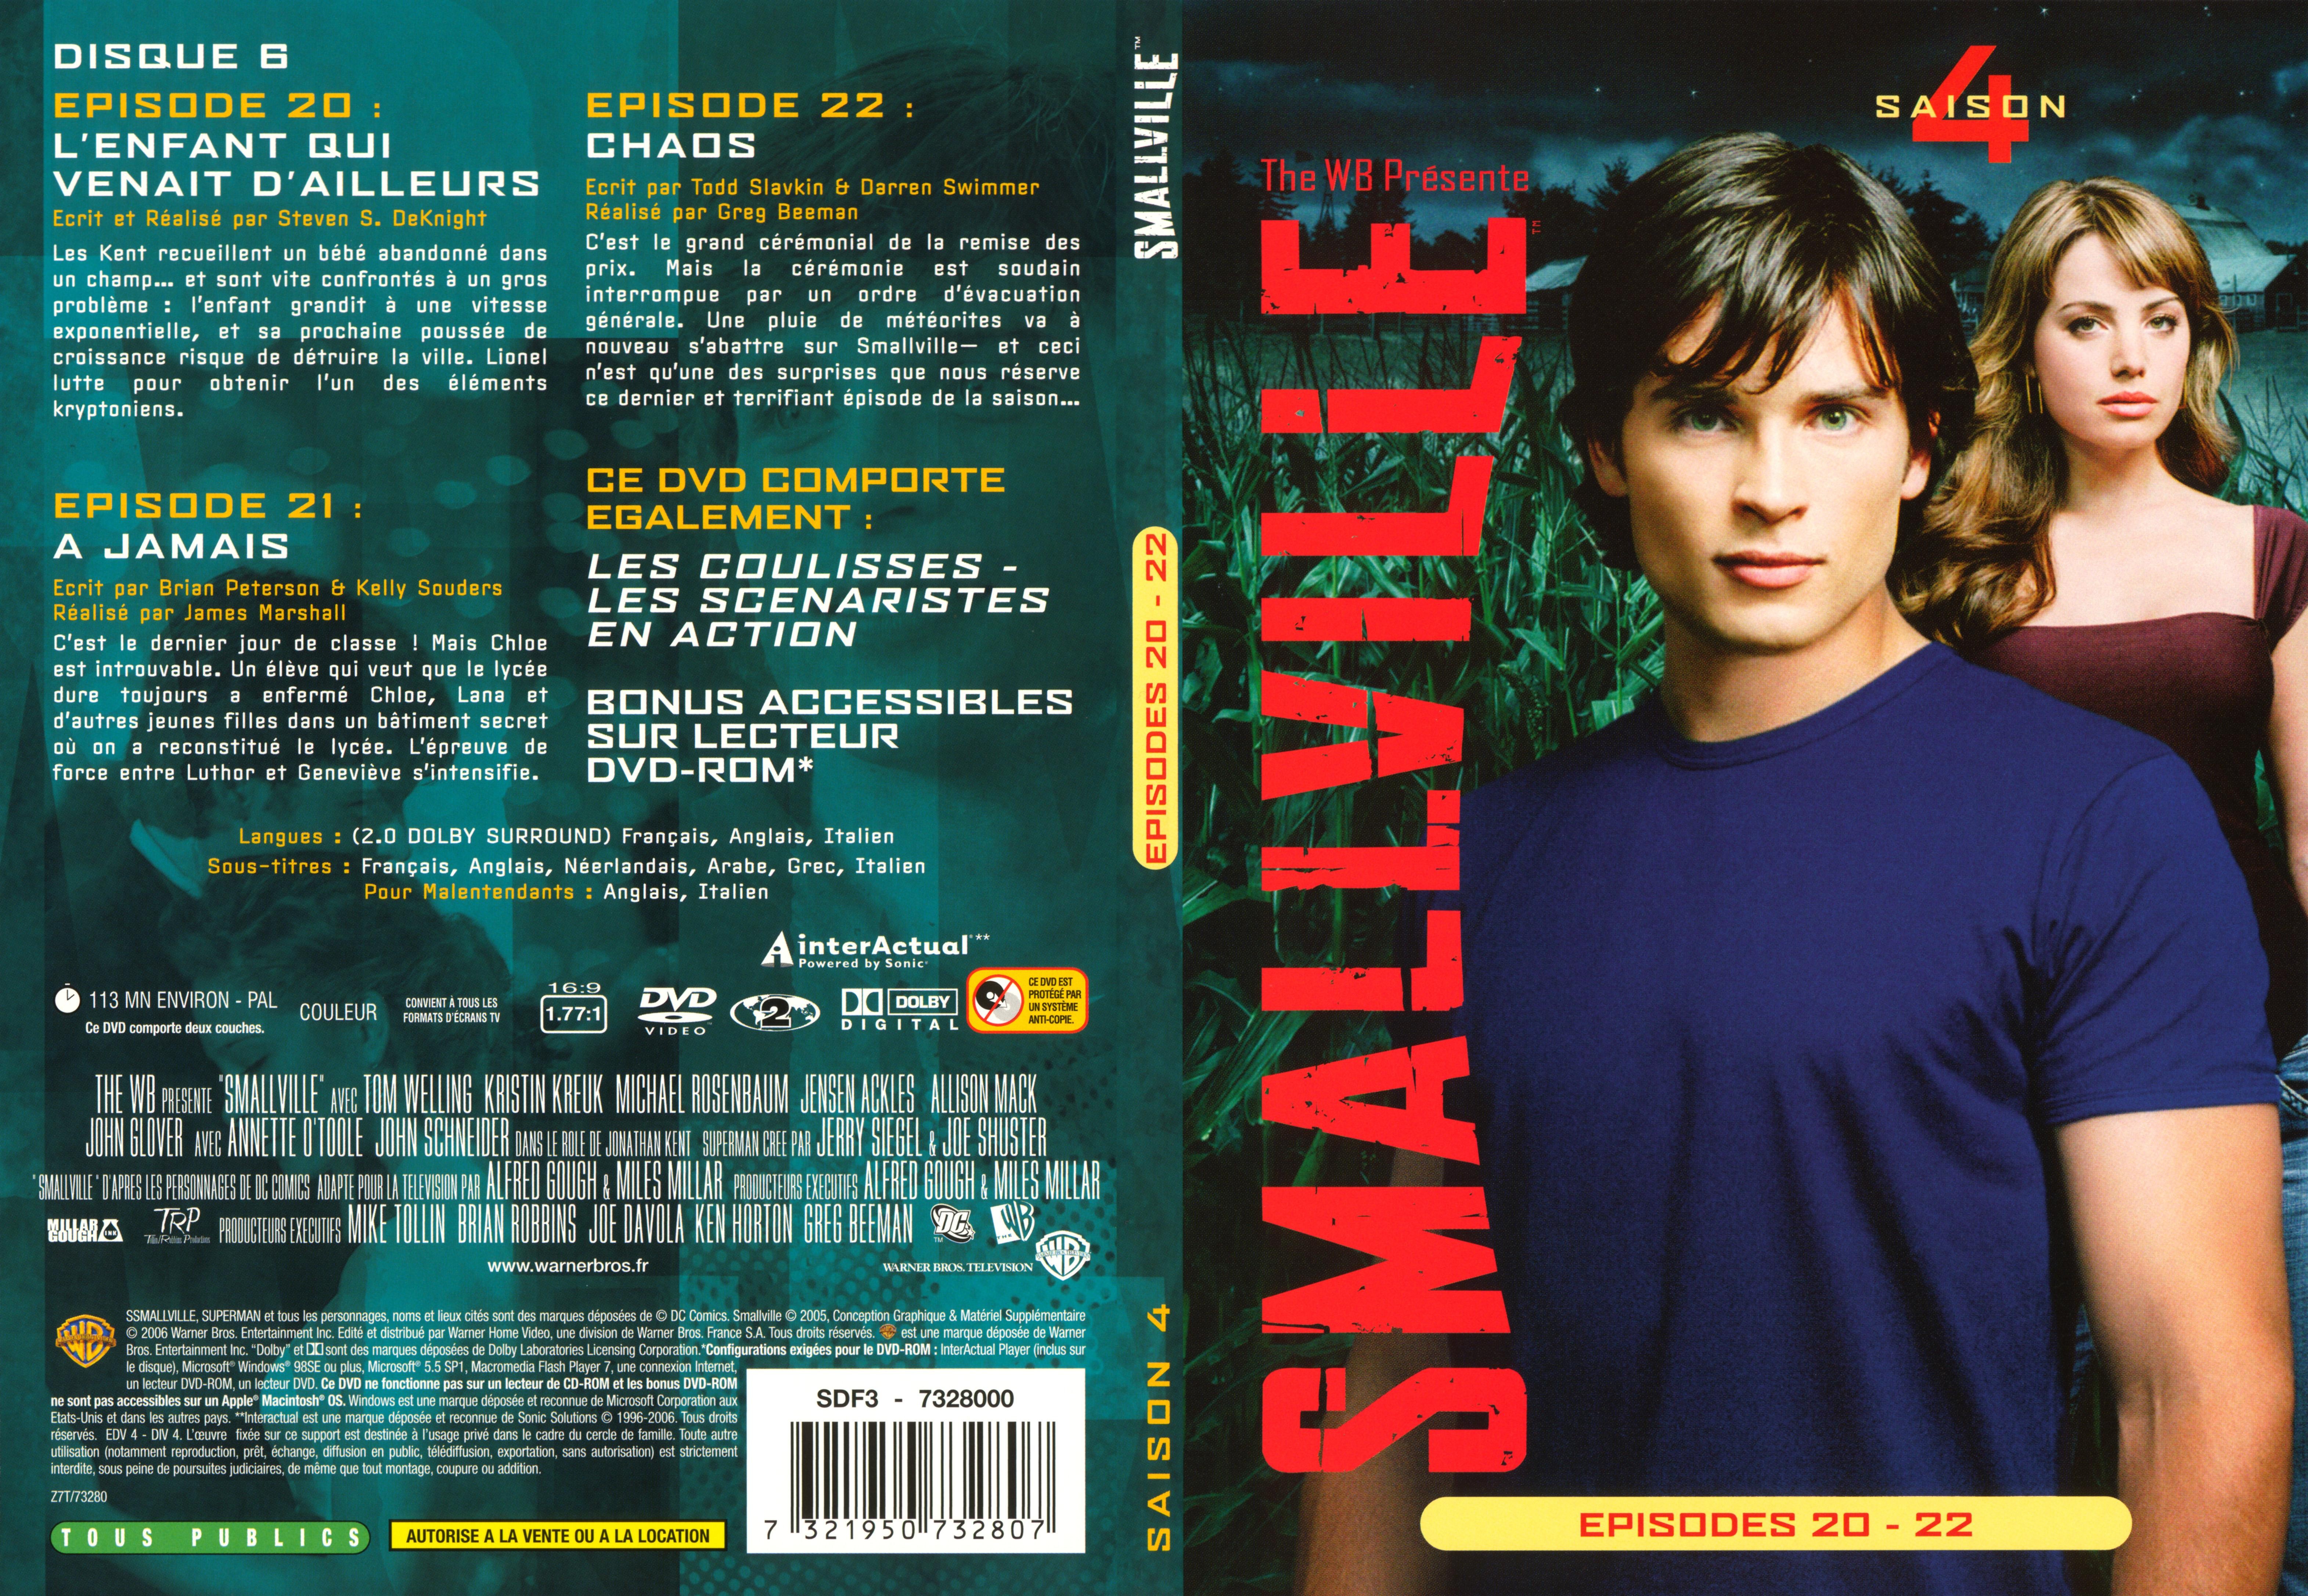 Jaquette DVD Smallville saison 4 DVD 6